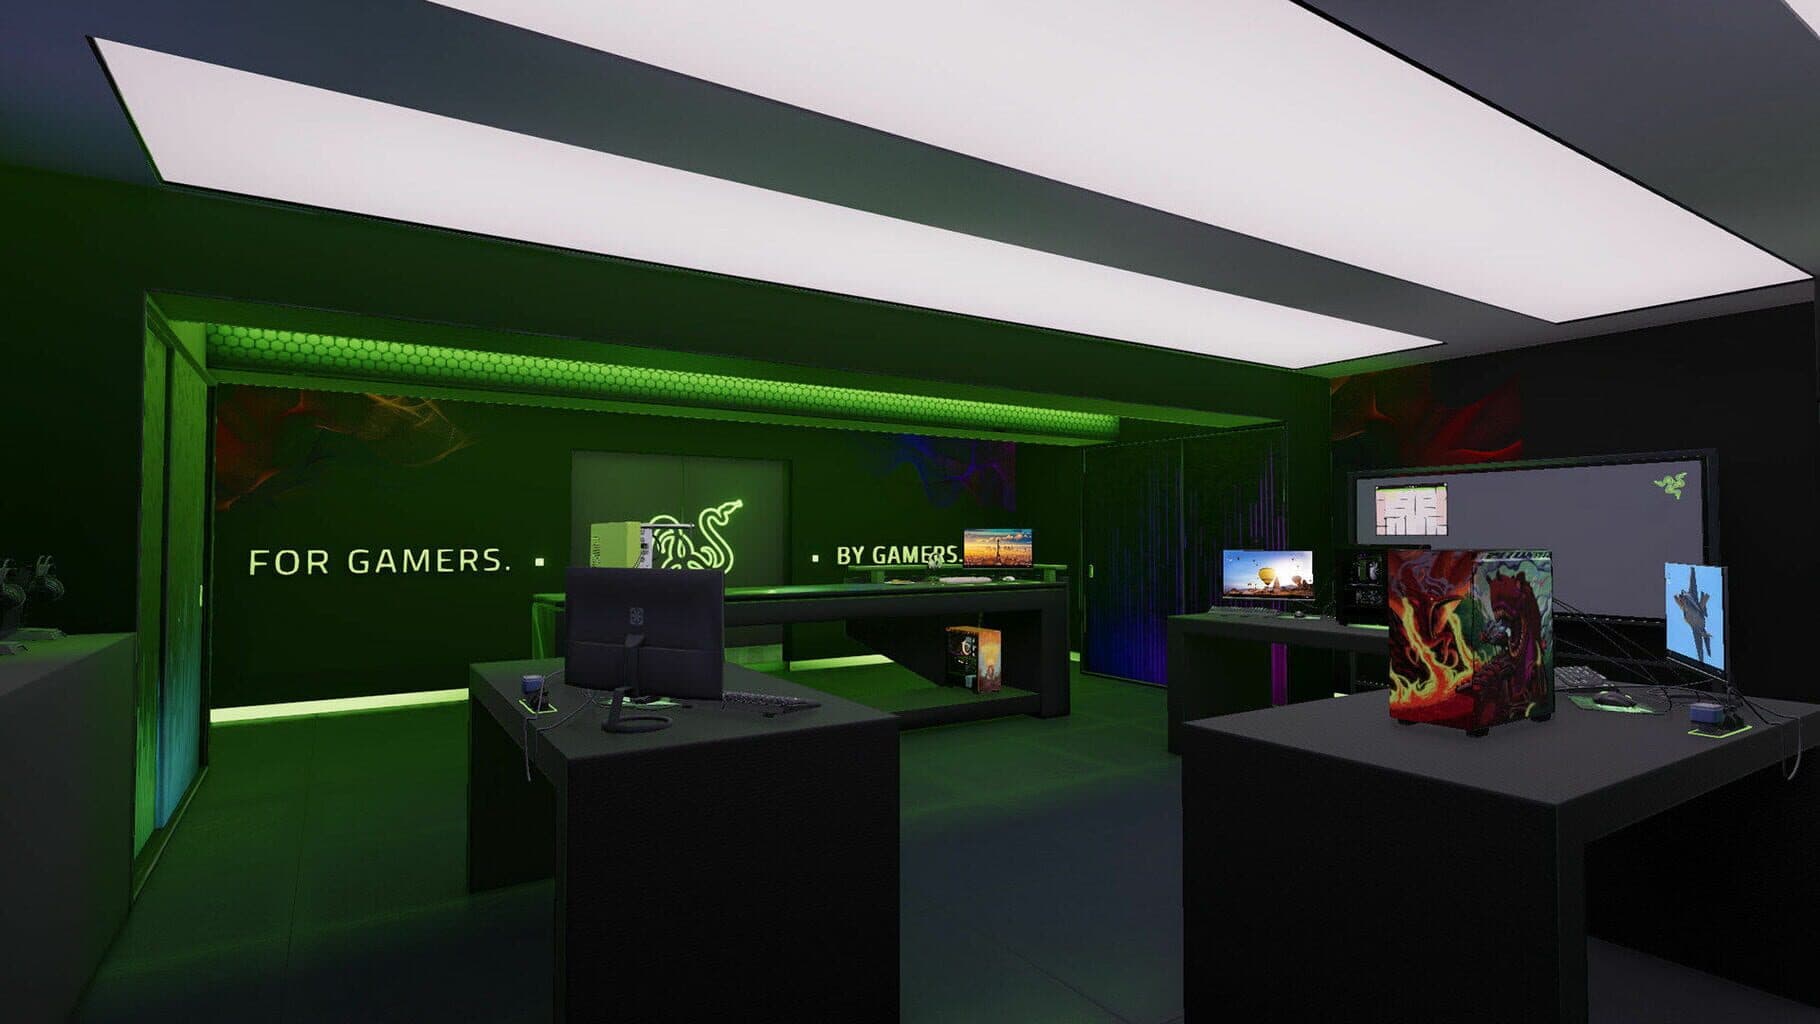 PC Building Simulator: Razer Workshop Image